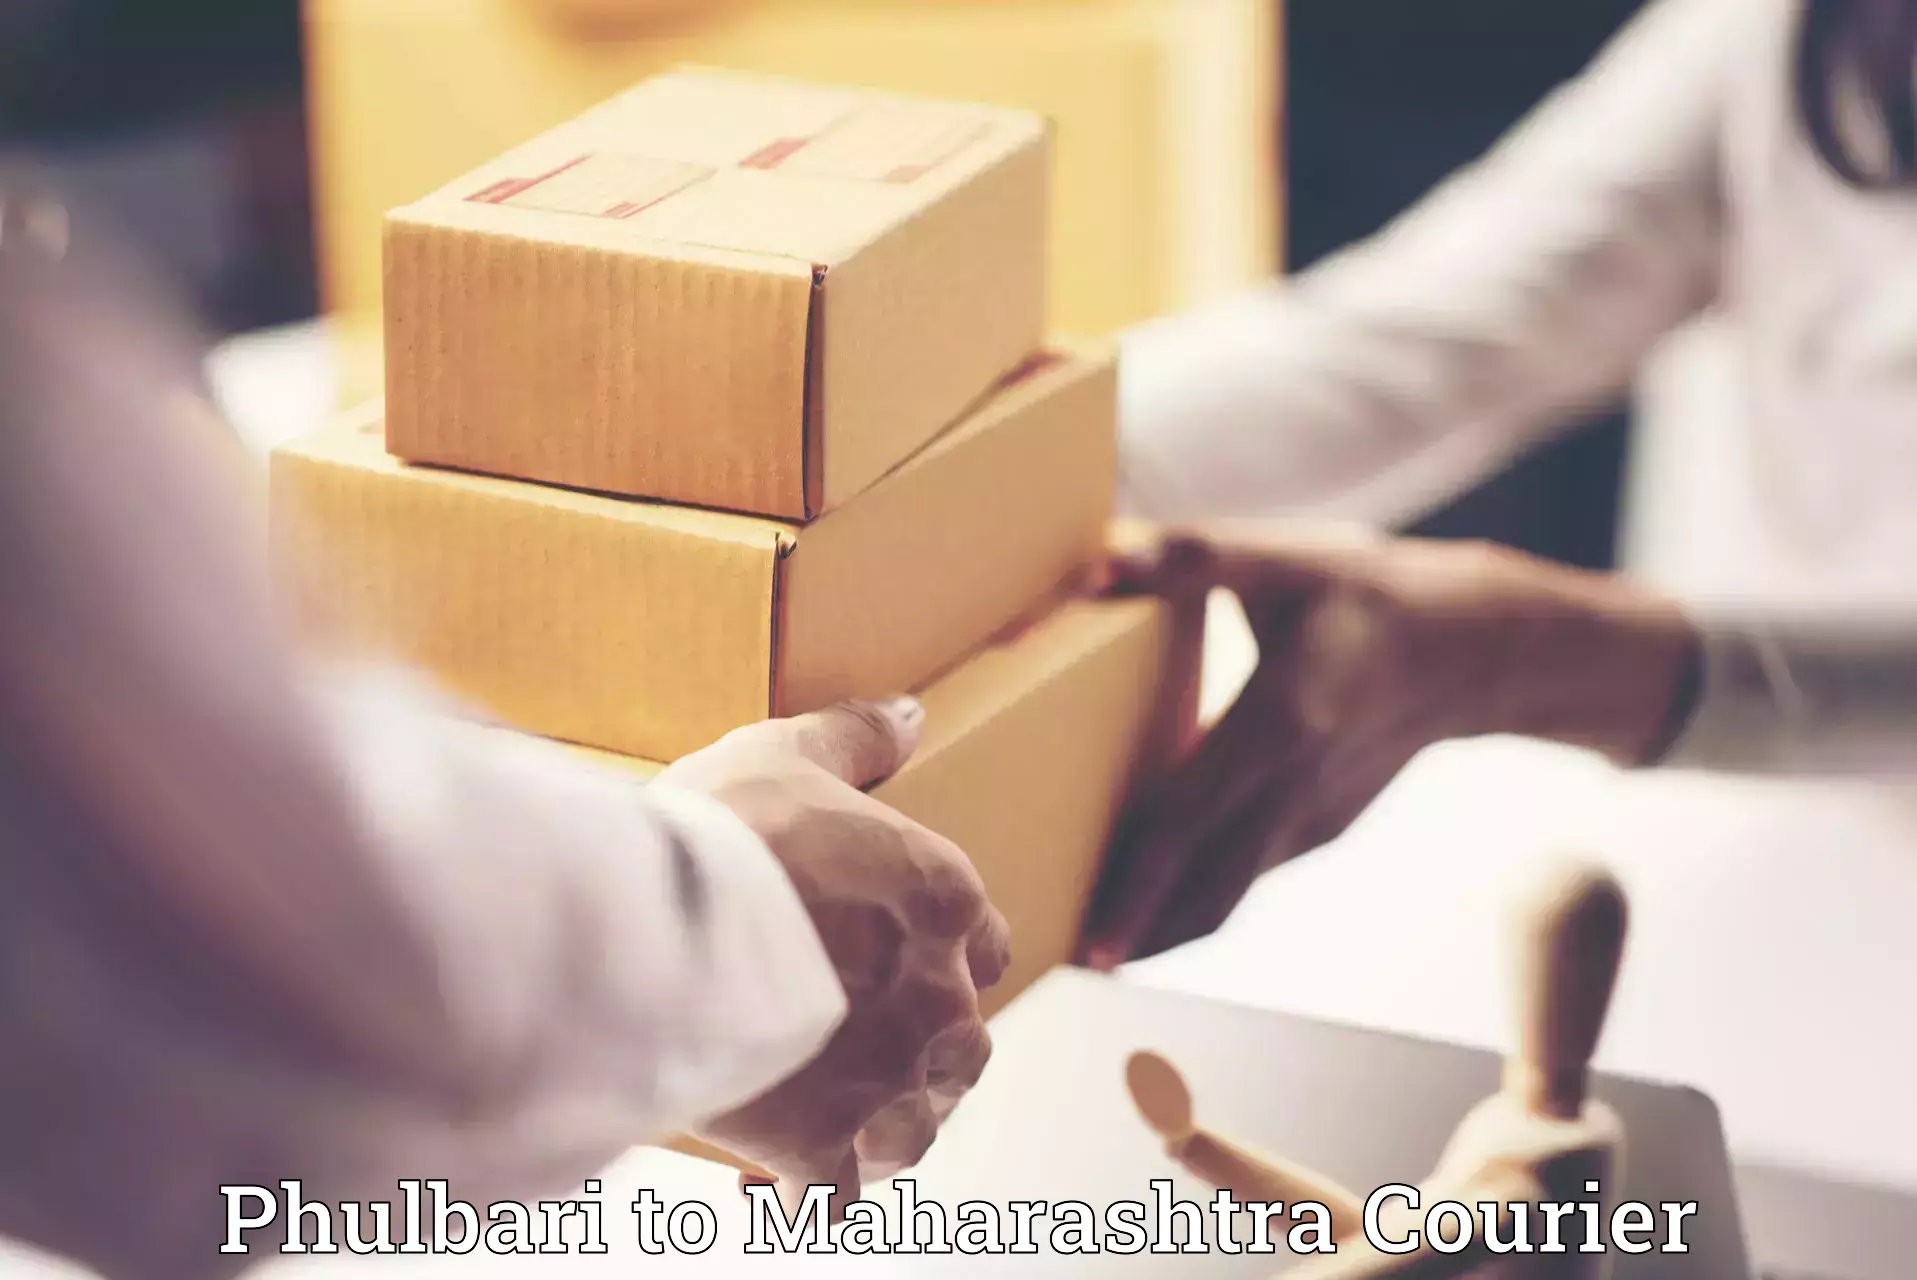 Professional moving company in Phulbari to Maharashtra